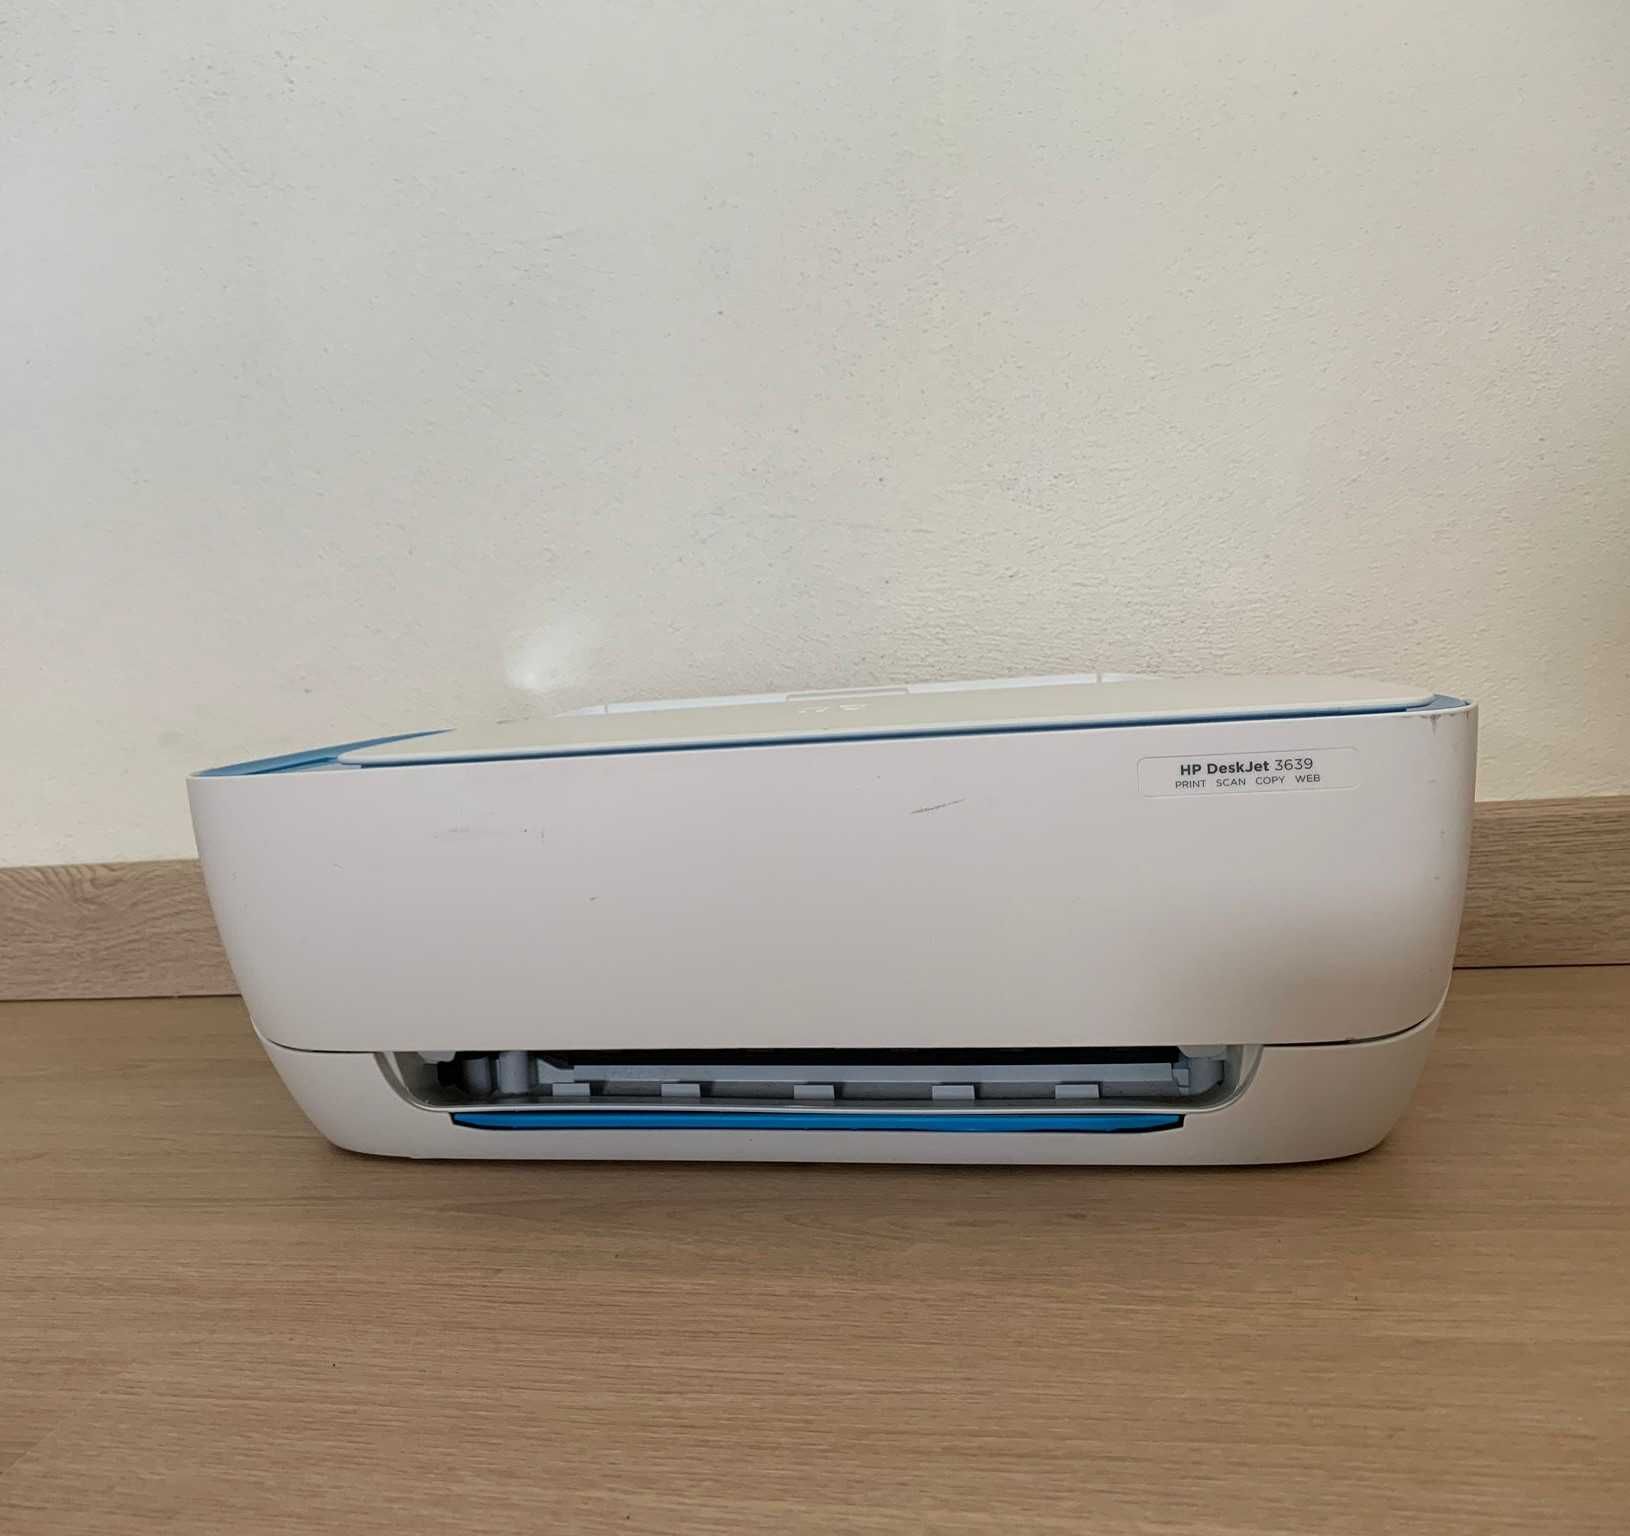 Impressora HP Deskjet 2721E Azul (Jato de Tinta - Wi-Fi - Instant Ink)